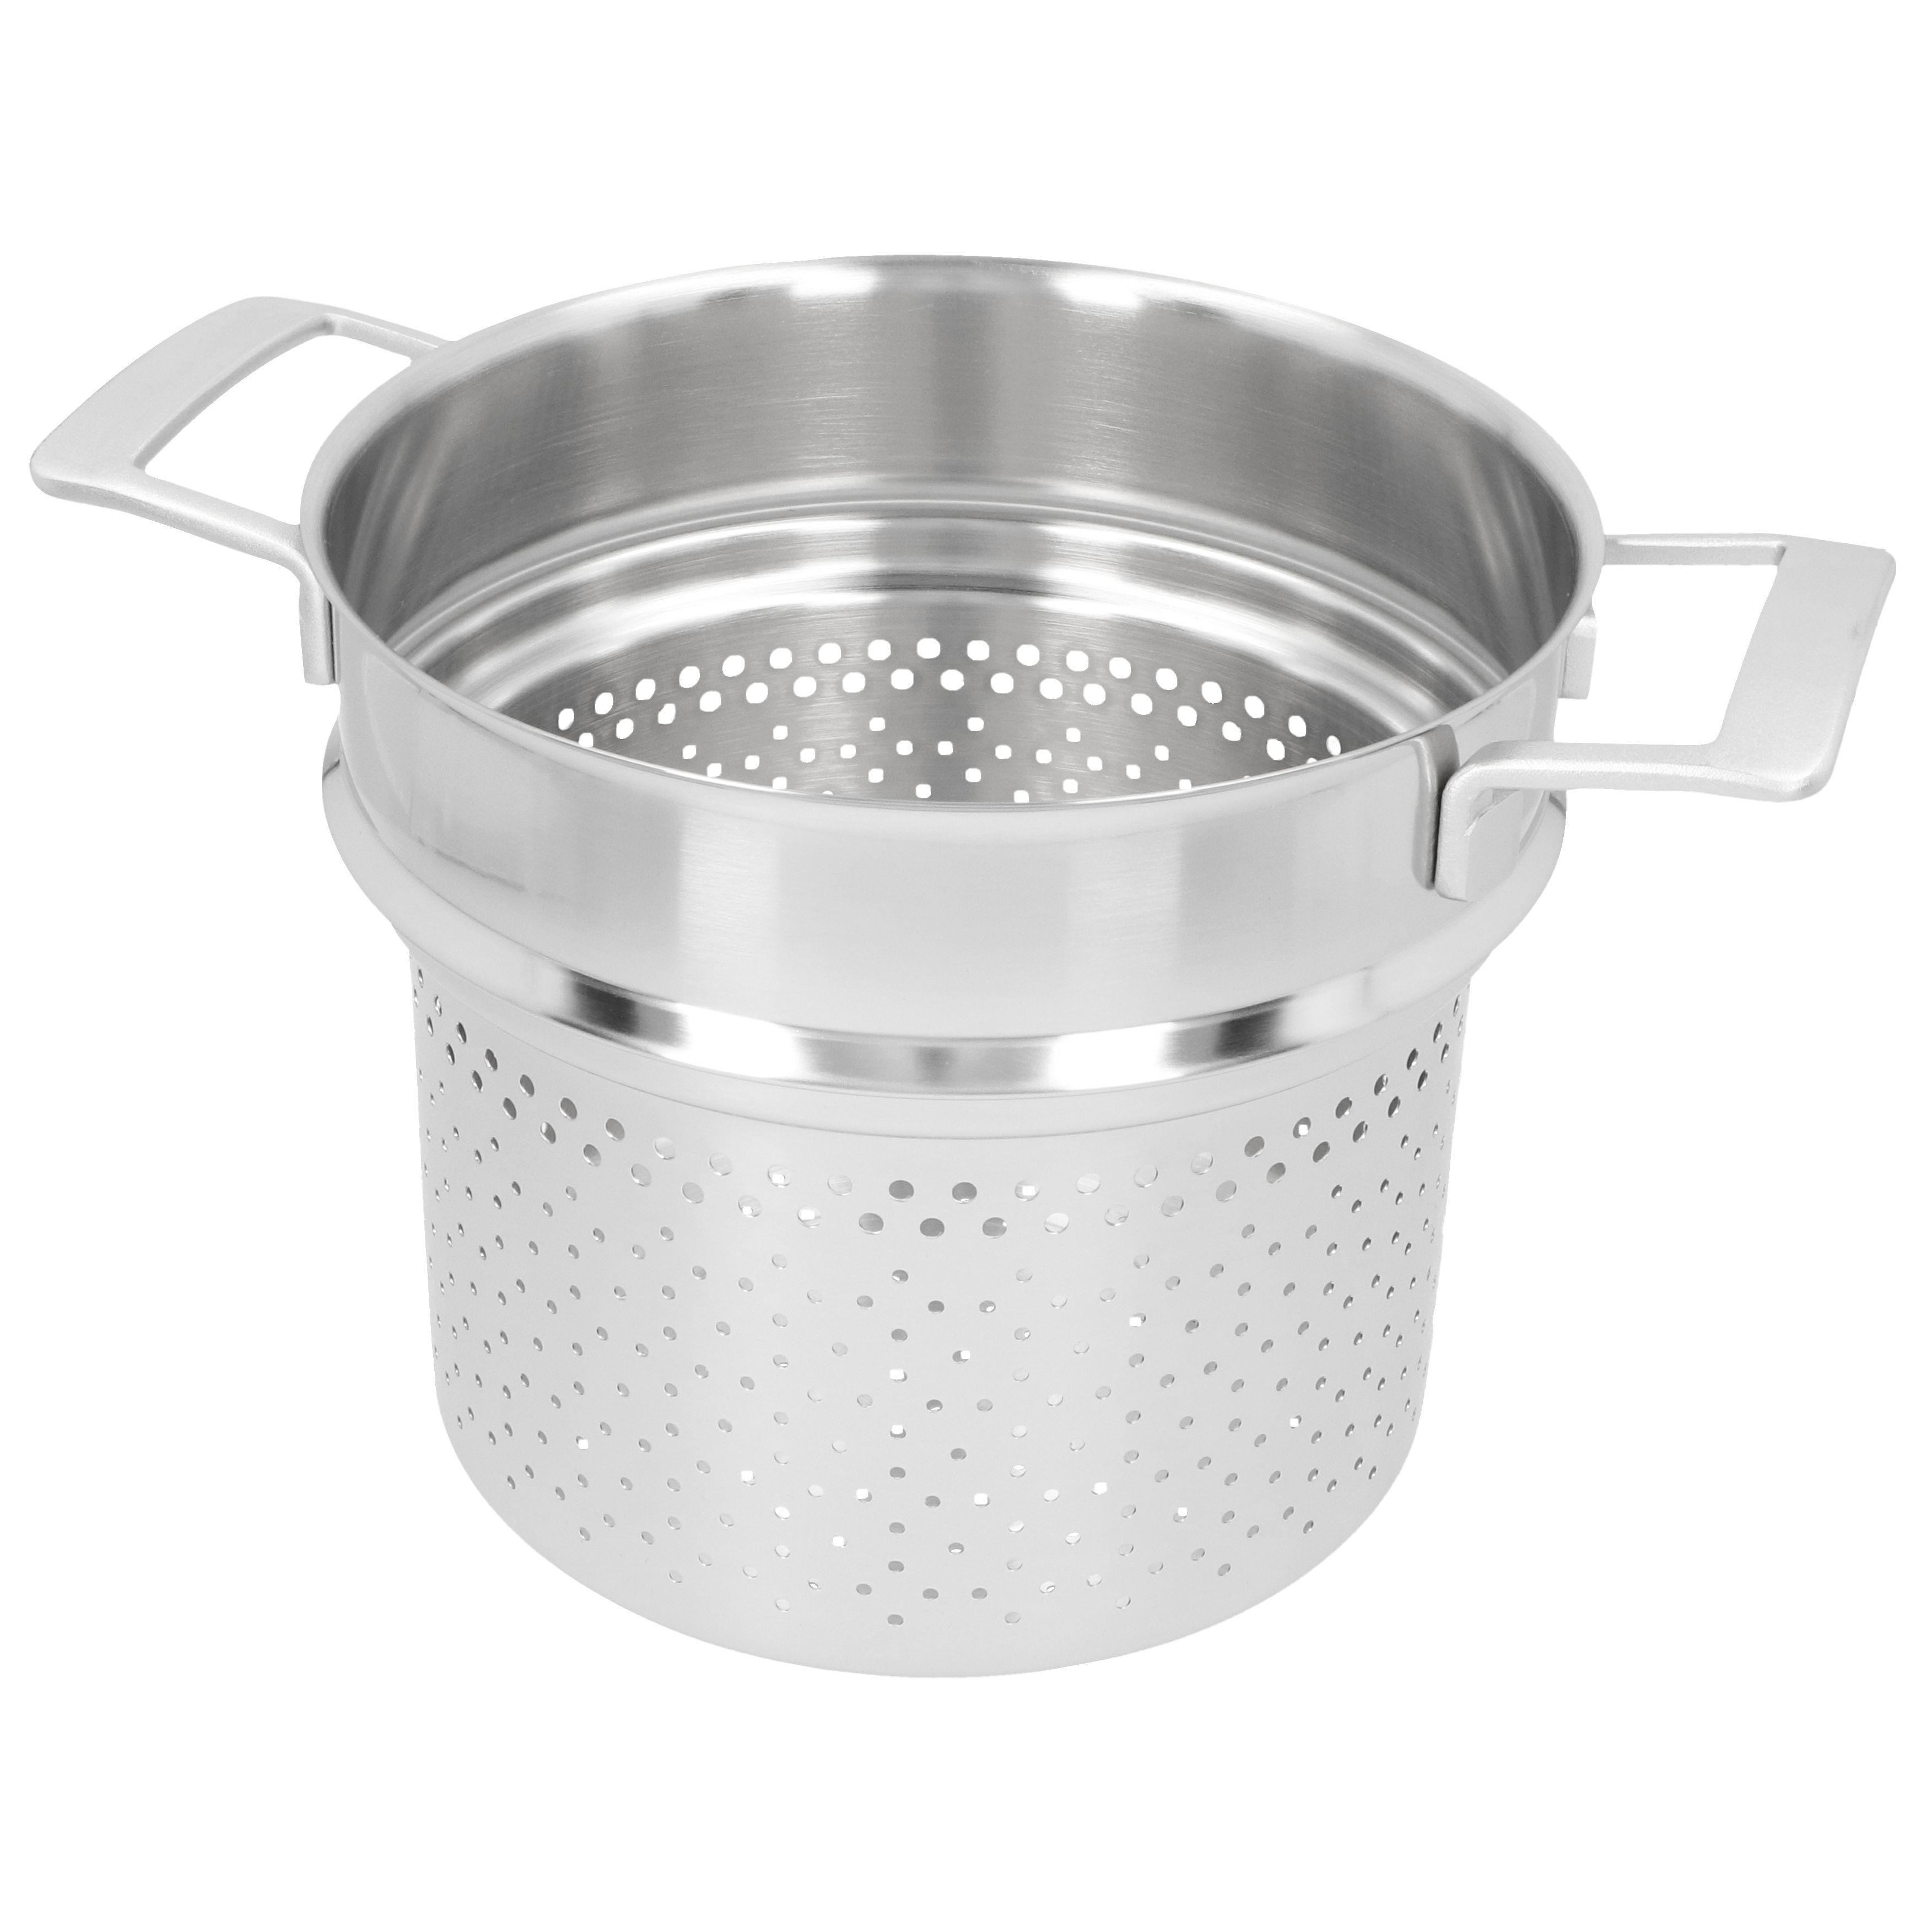 Emeril Stainless Steel Pot/pasta Pot Insert Set With Lid #45973